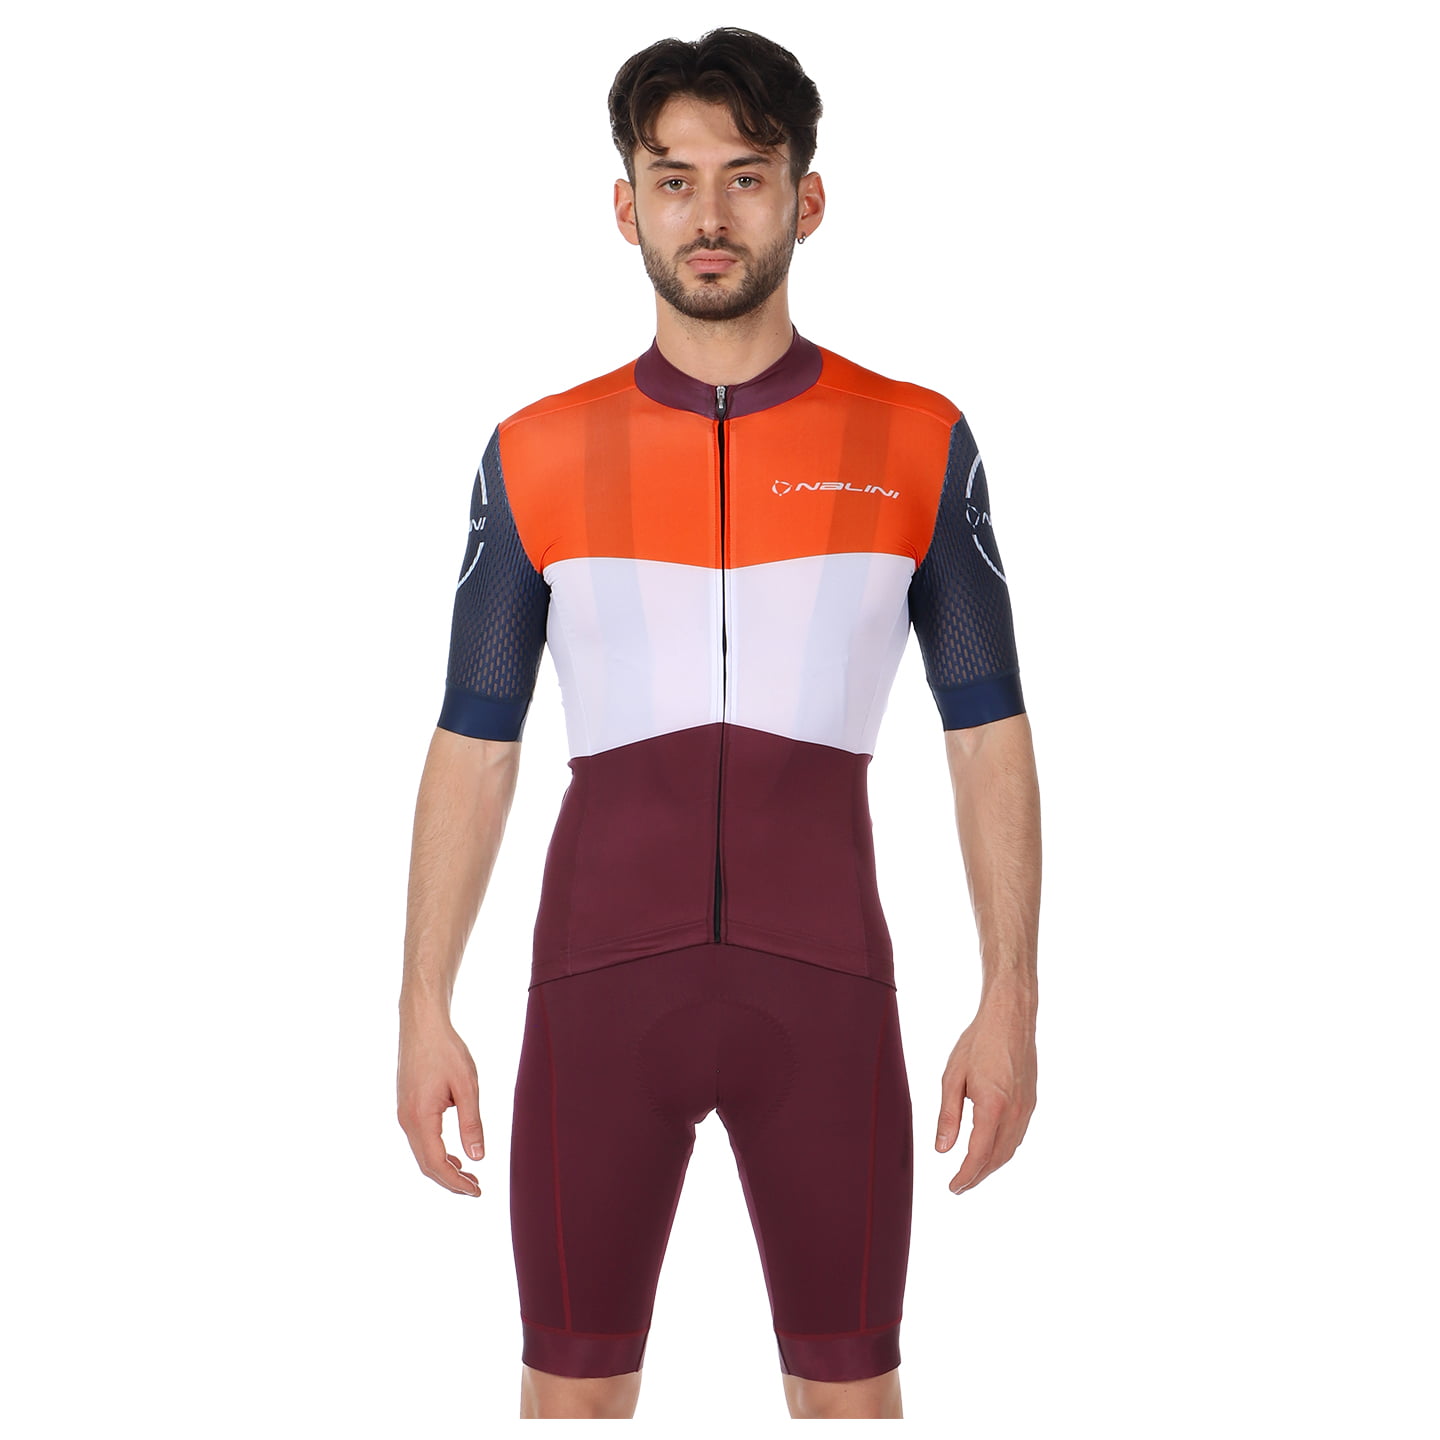 NALINI Hollywood Set (cycling jersey + cycling shorts) Set (2 pieces), for men